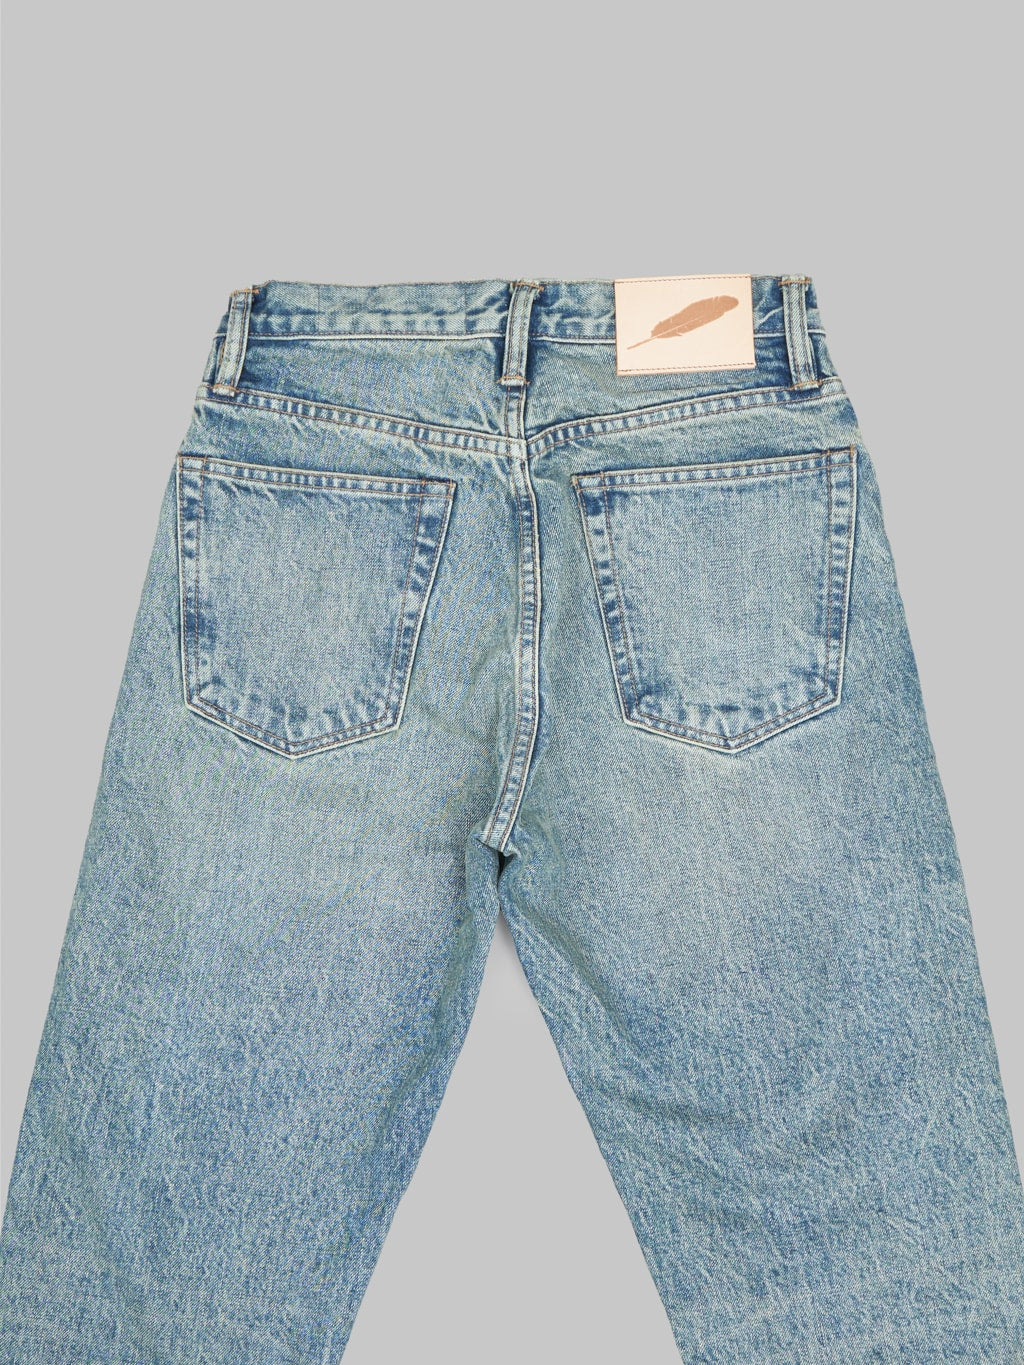 rogue territory strider light indigo wash selvedge jeans back pockets